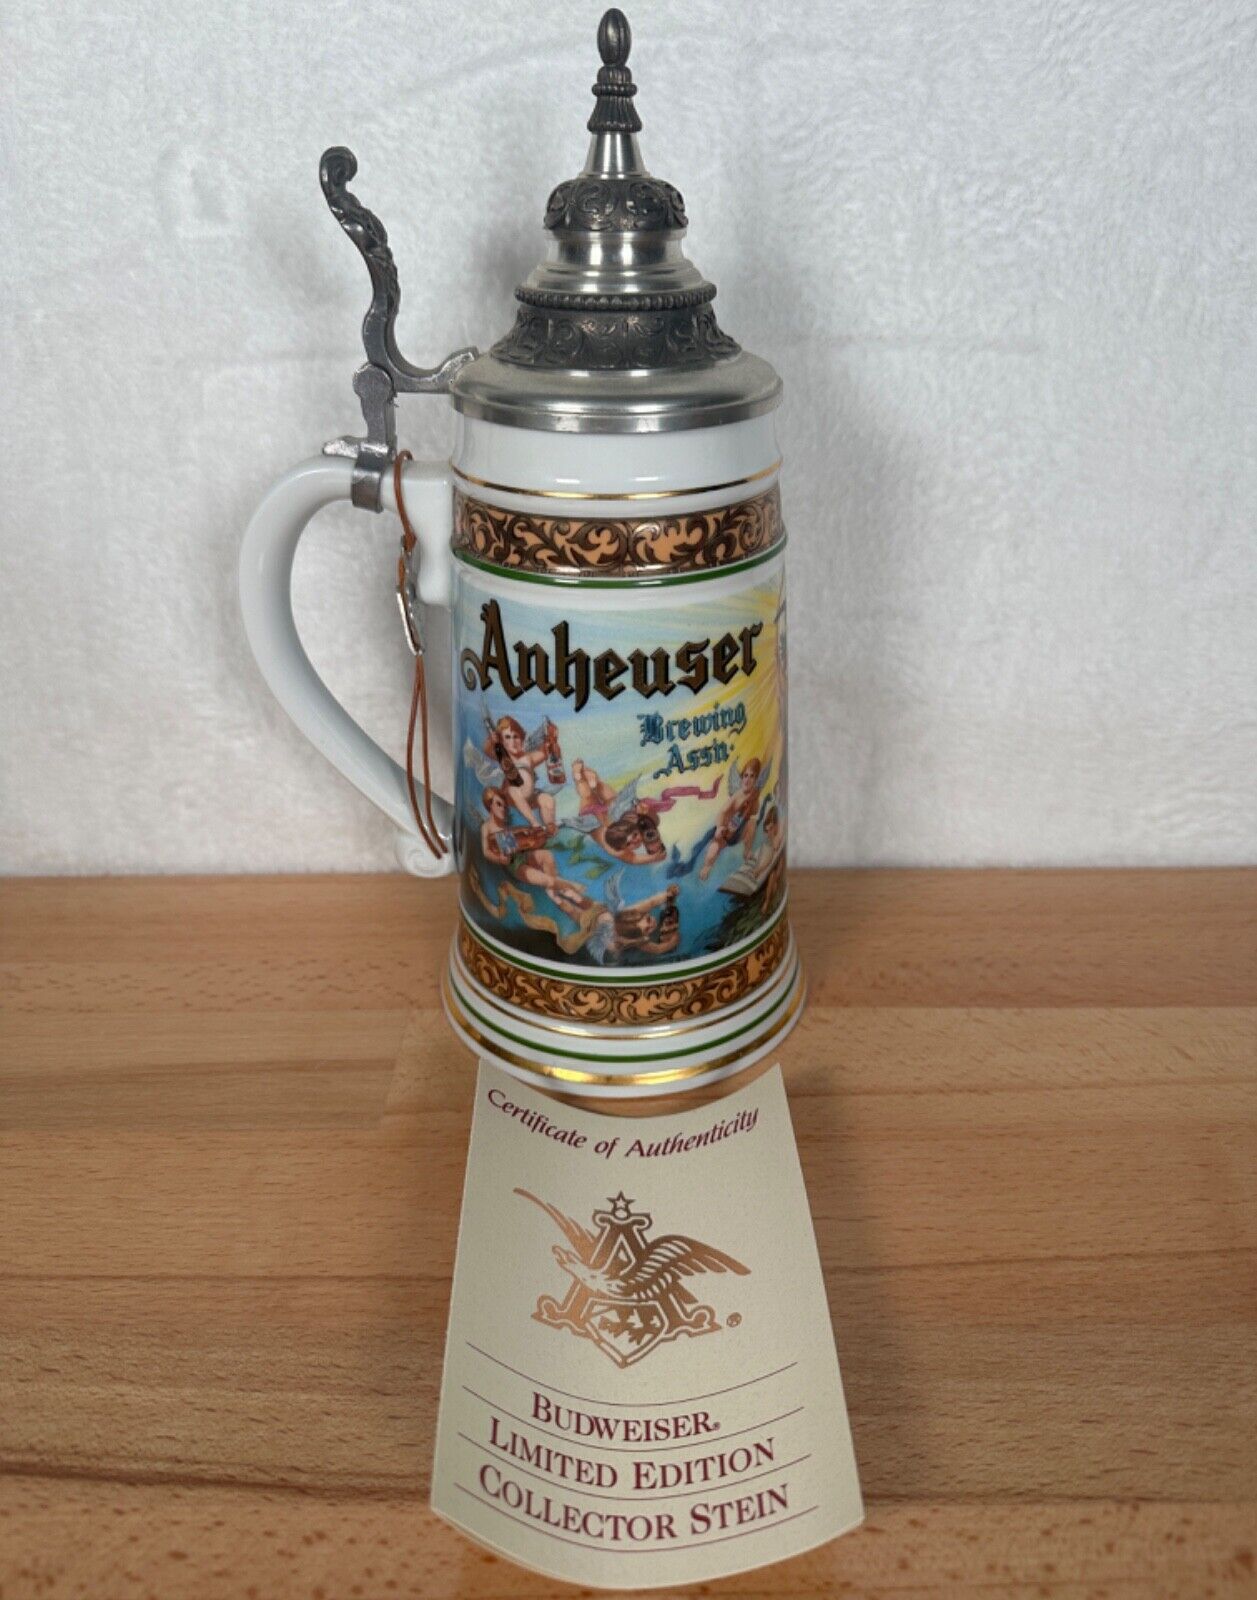 Anheuser Busch Budweiser Cherub Lidded Beer Stein - Made In Germany in 1992